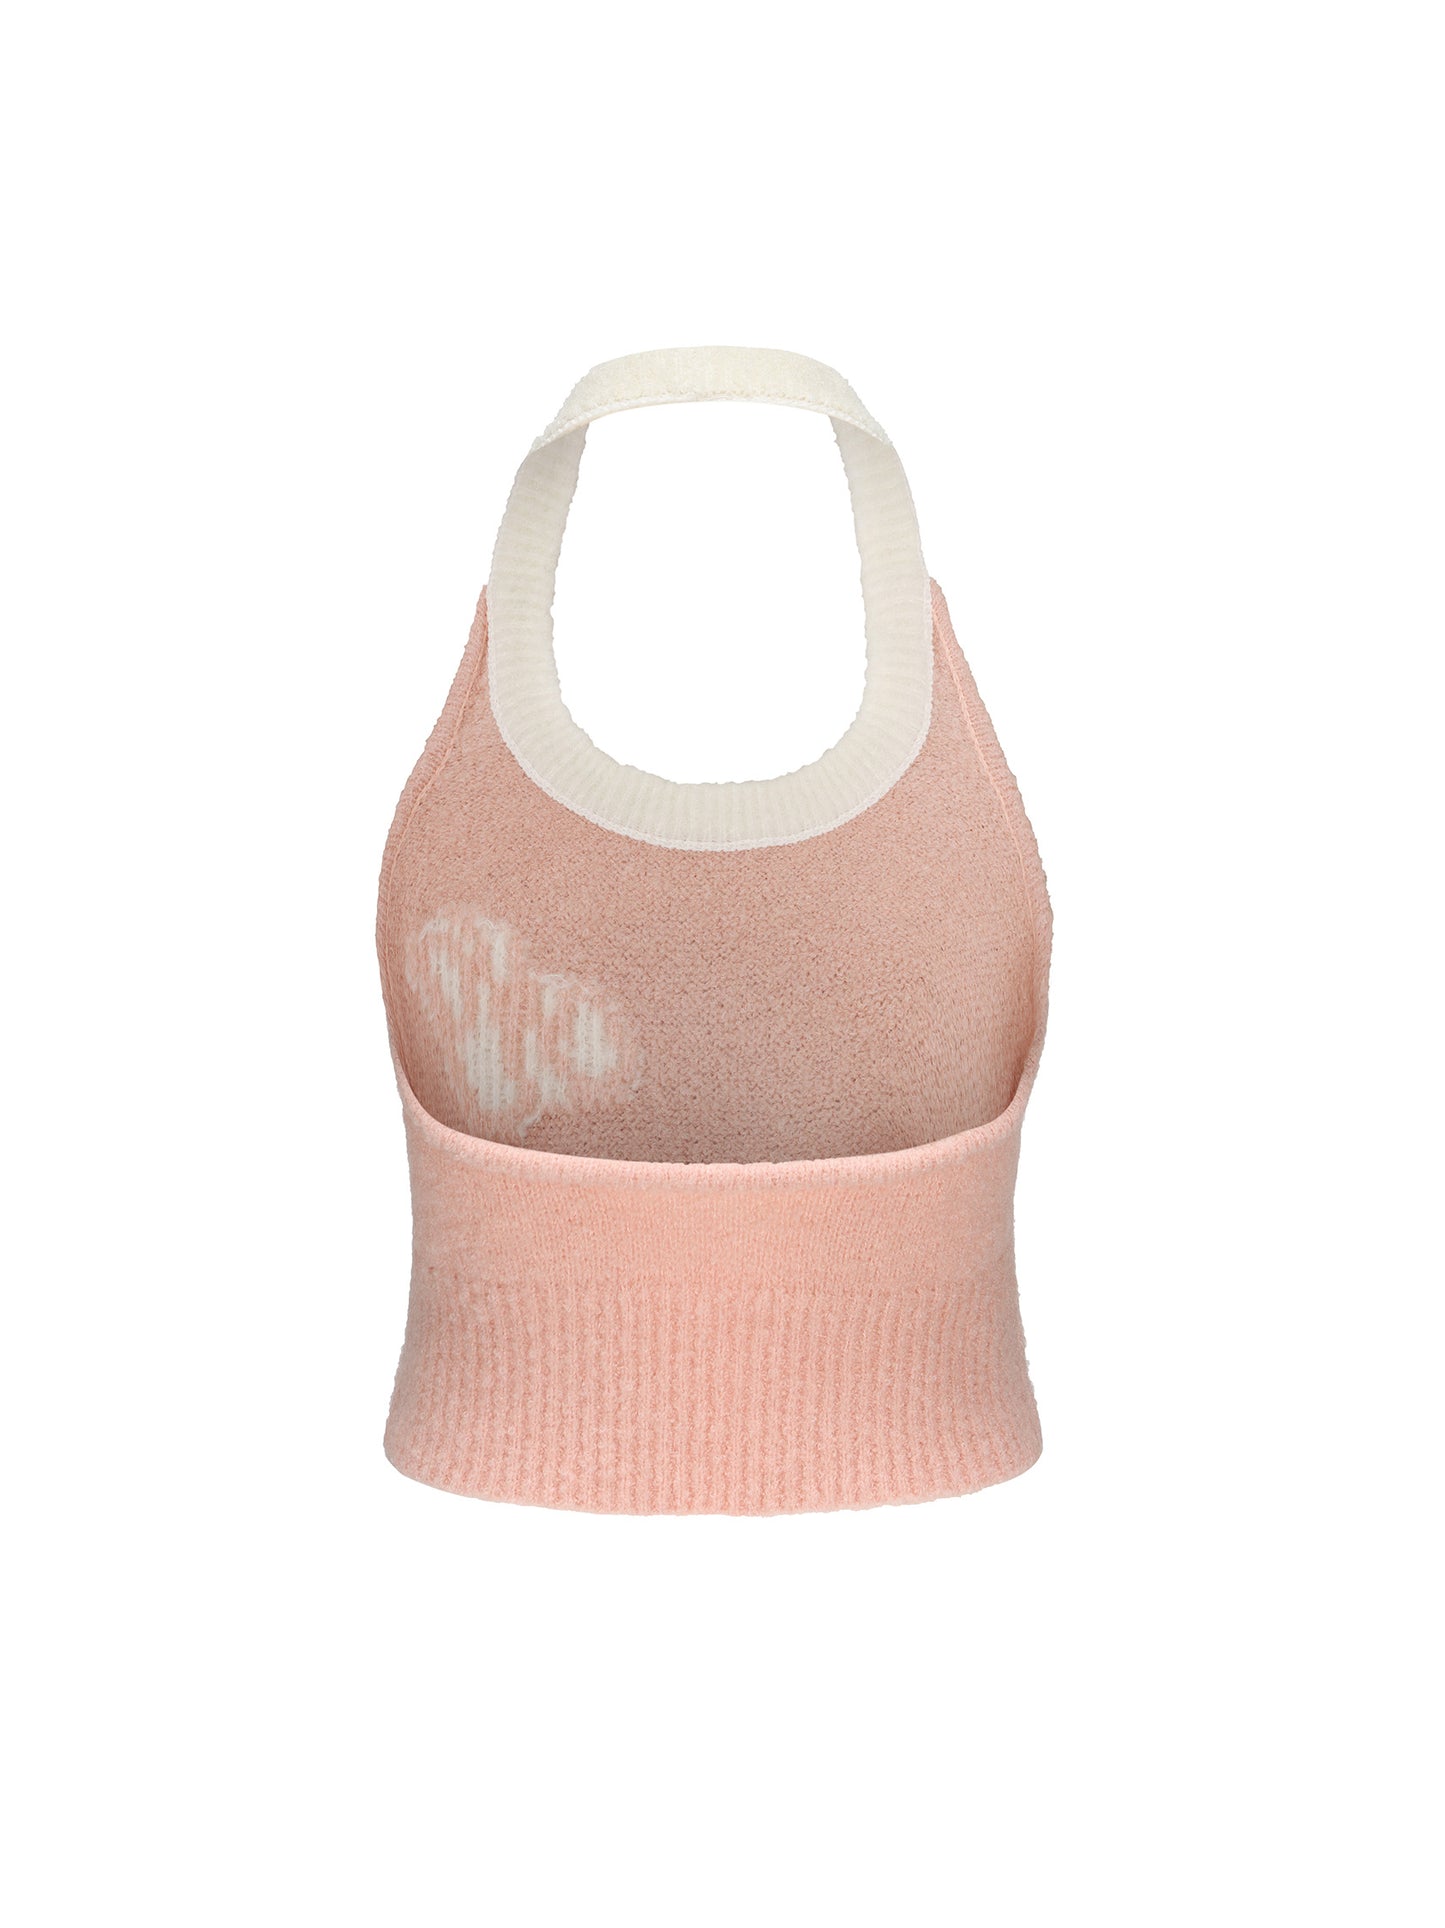 Macie Knit Halter Top (Light Pink) (Final Sale)